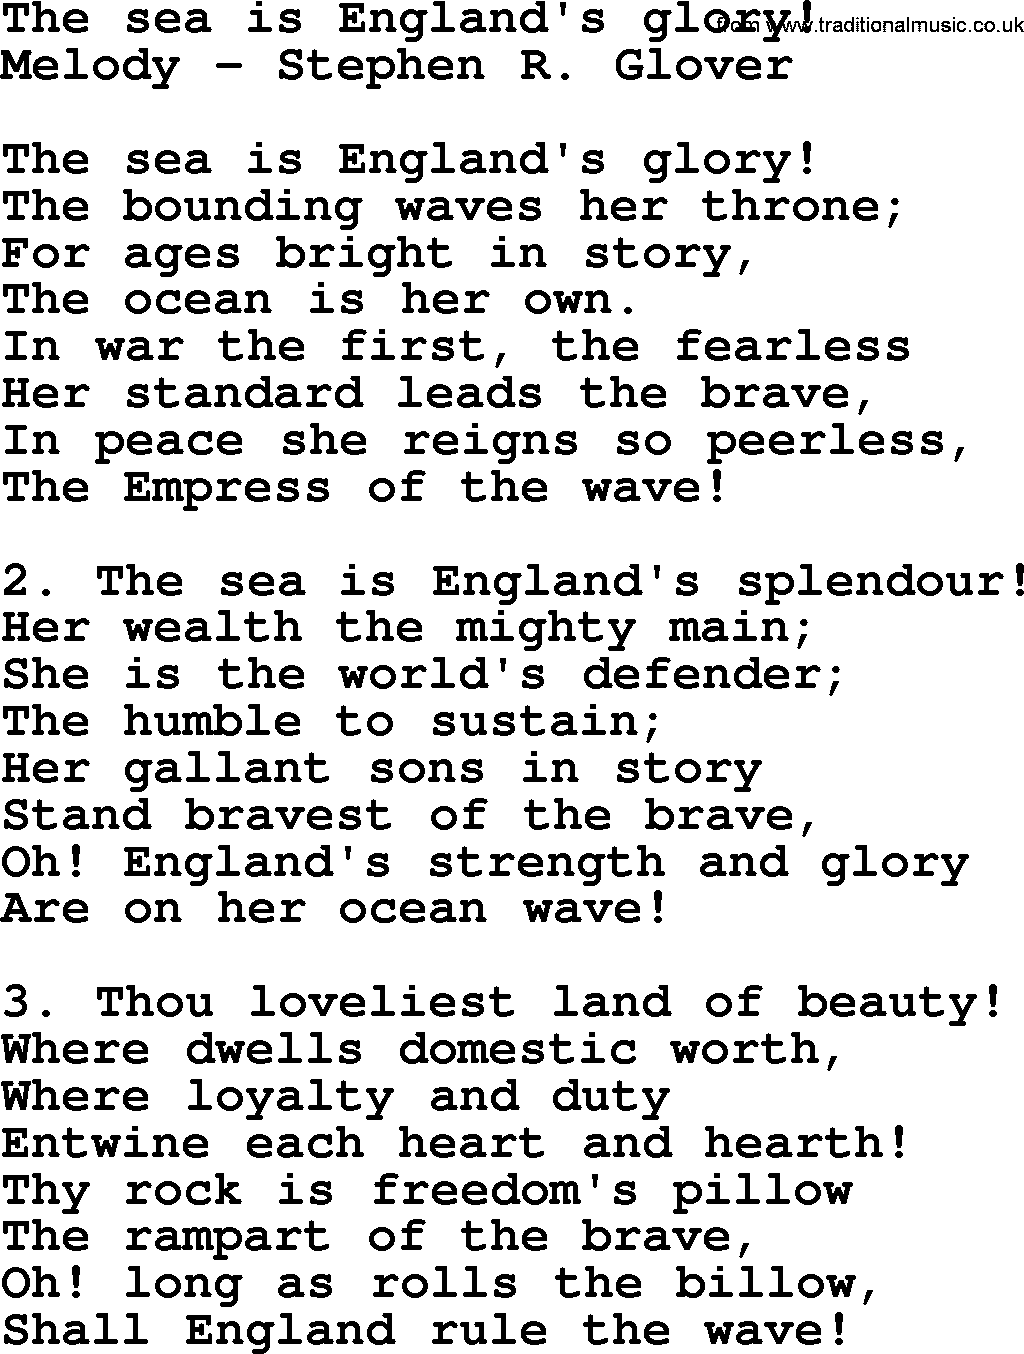 Sea Song or Shantie: The Sea Is Englands Glory, lyrics